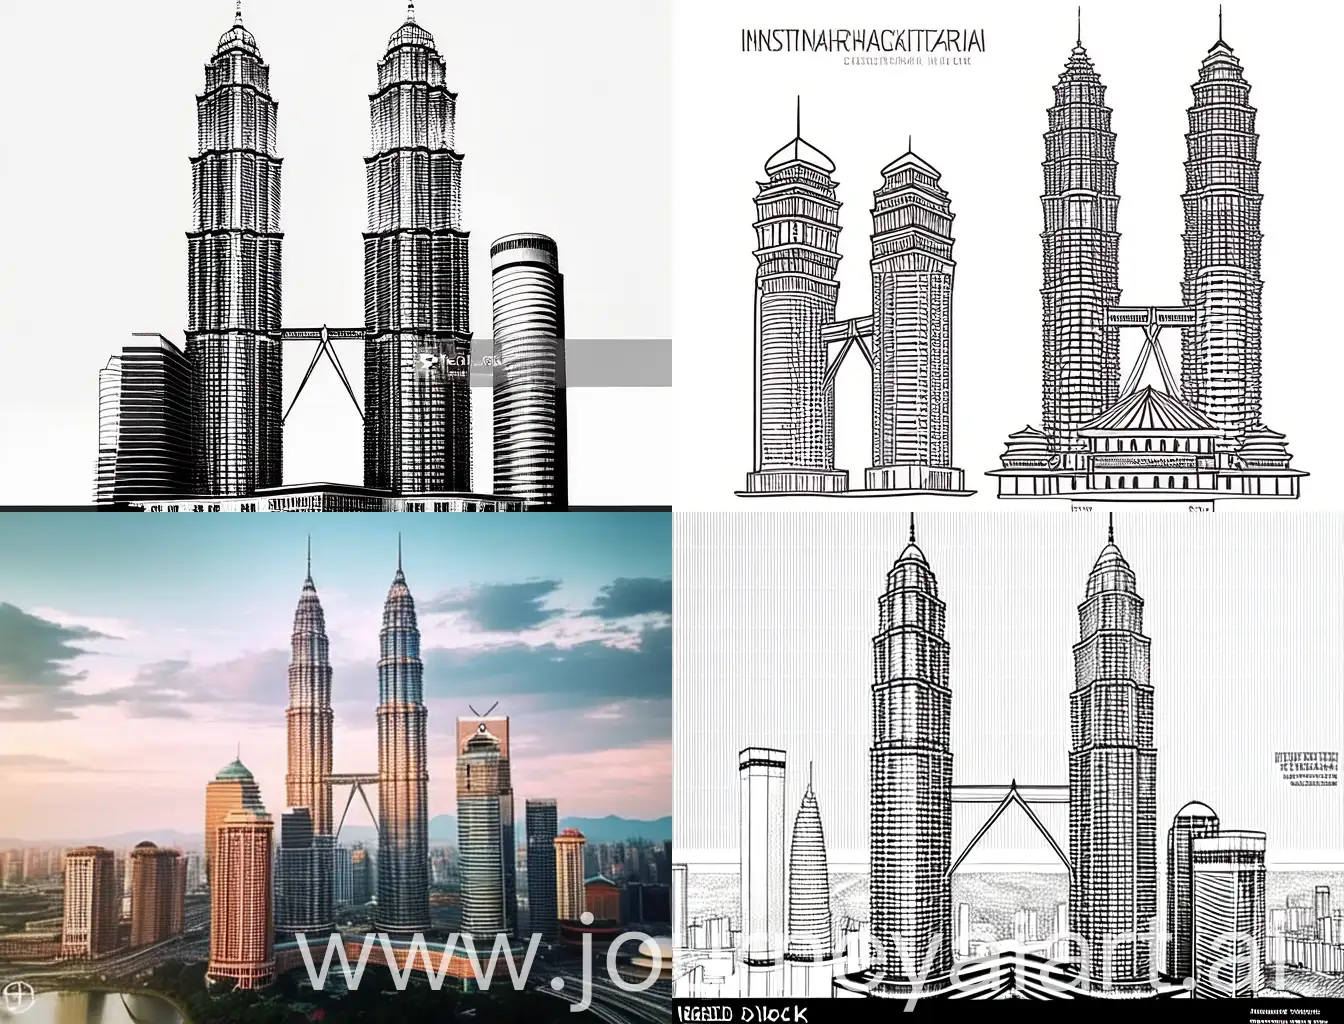 Illustrative-Art-of-Kuala-Lumpurs-Iconic-Towers-and-Landmarks